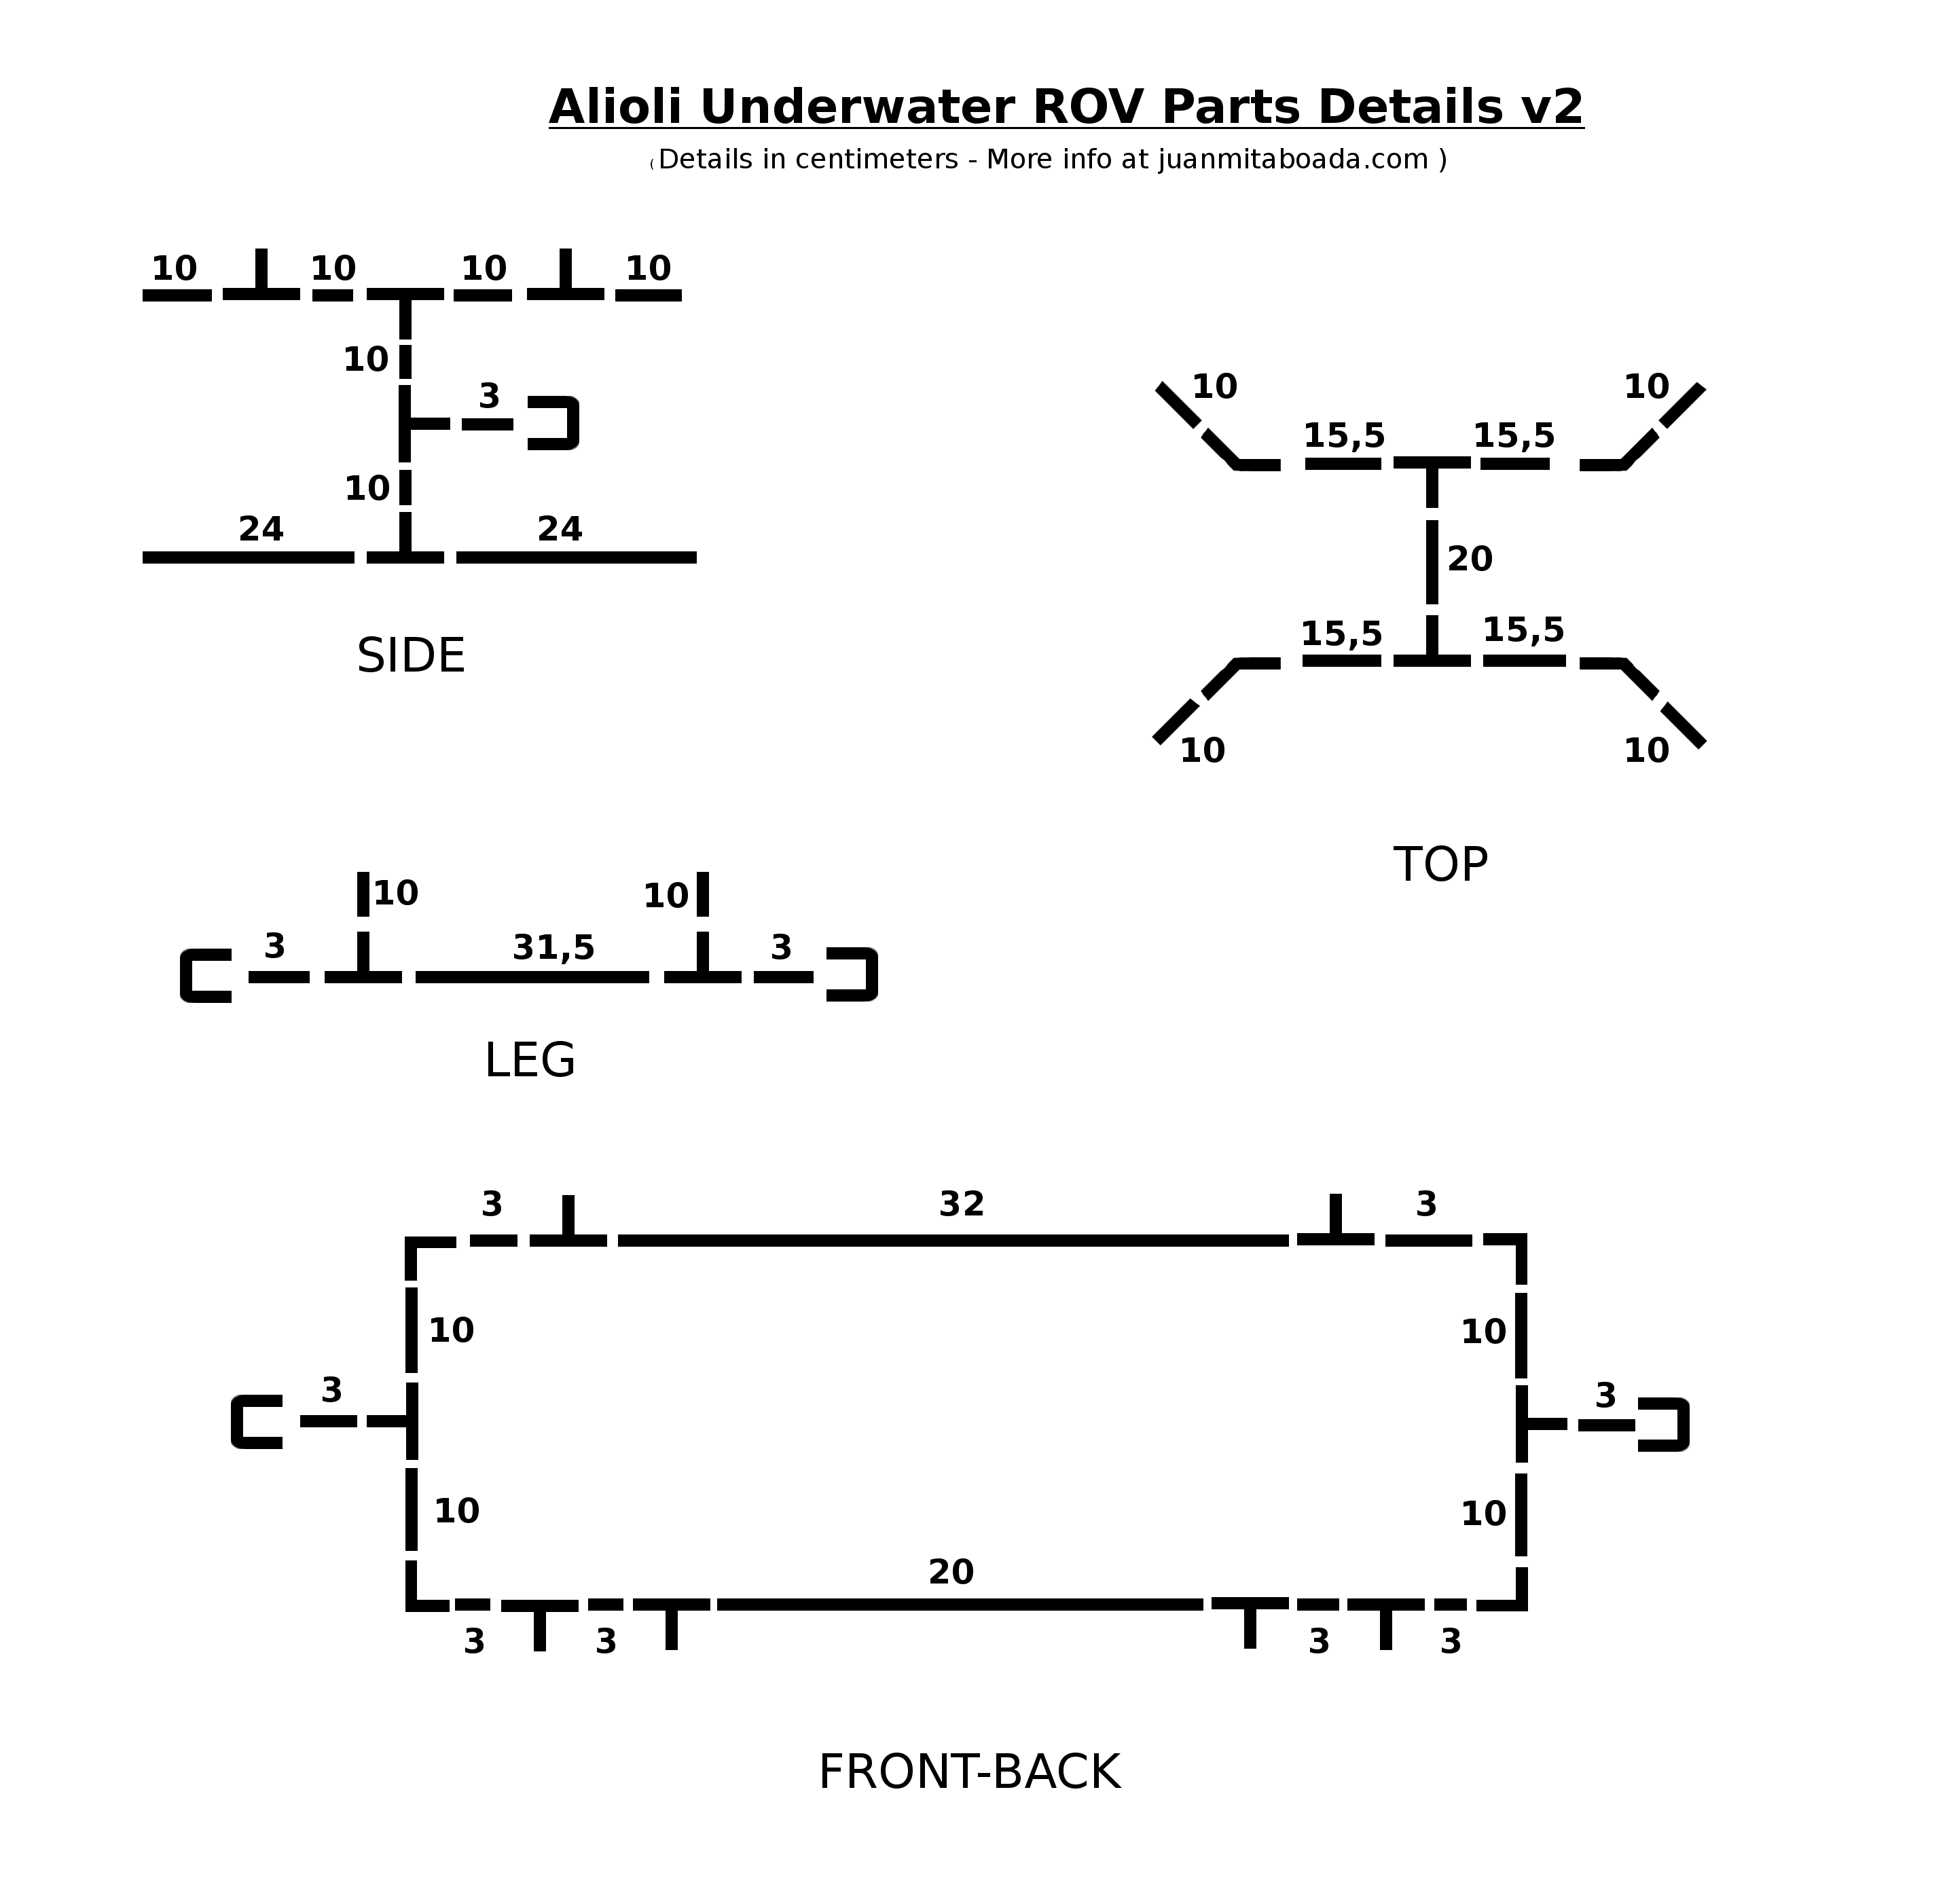 Alioli Underwater ROV Parts Details v2 in centimeters